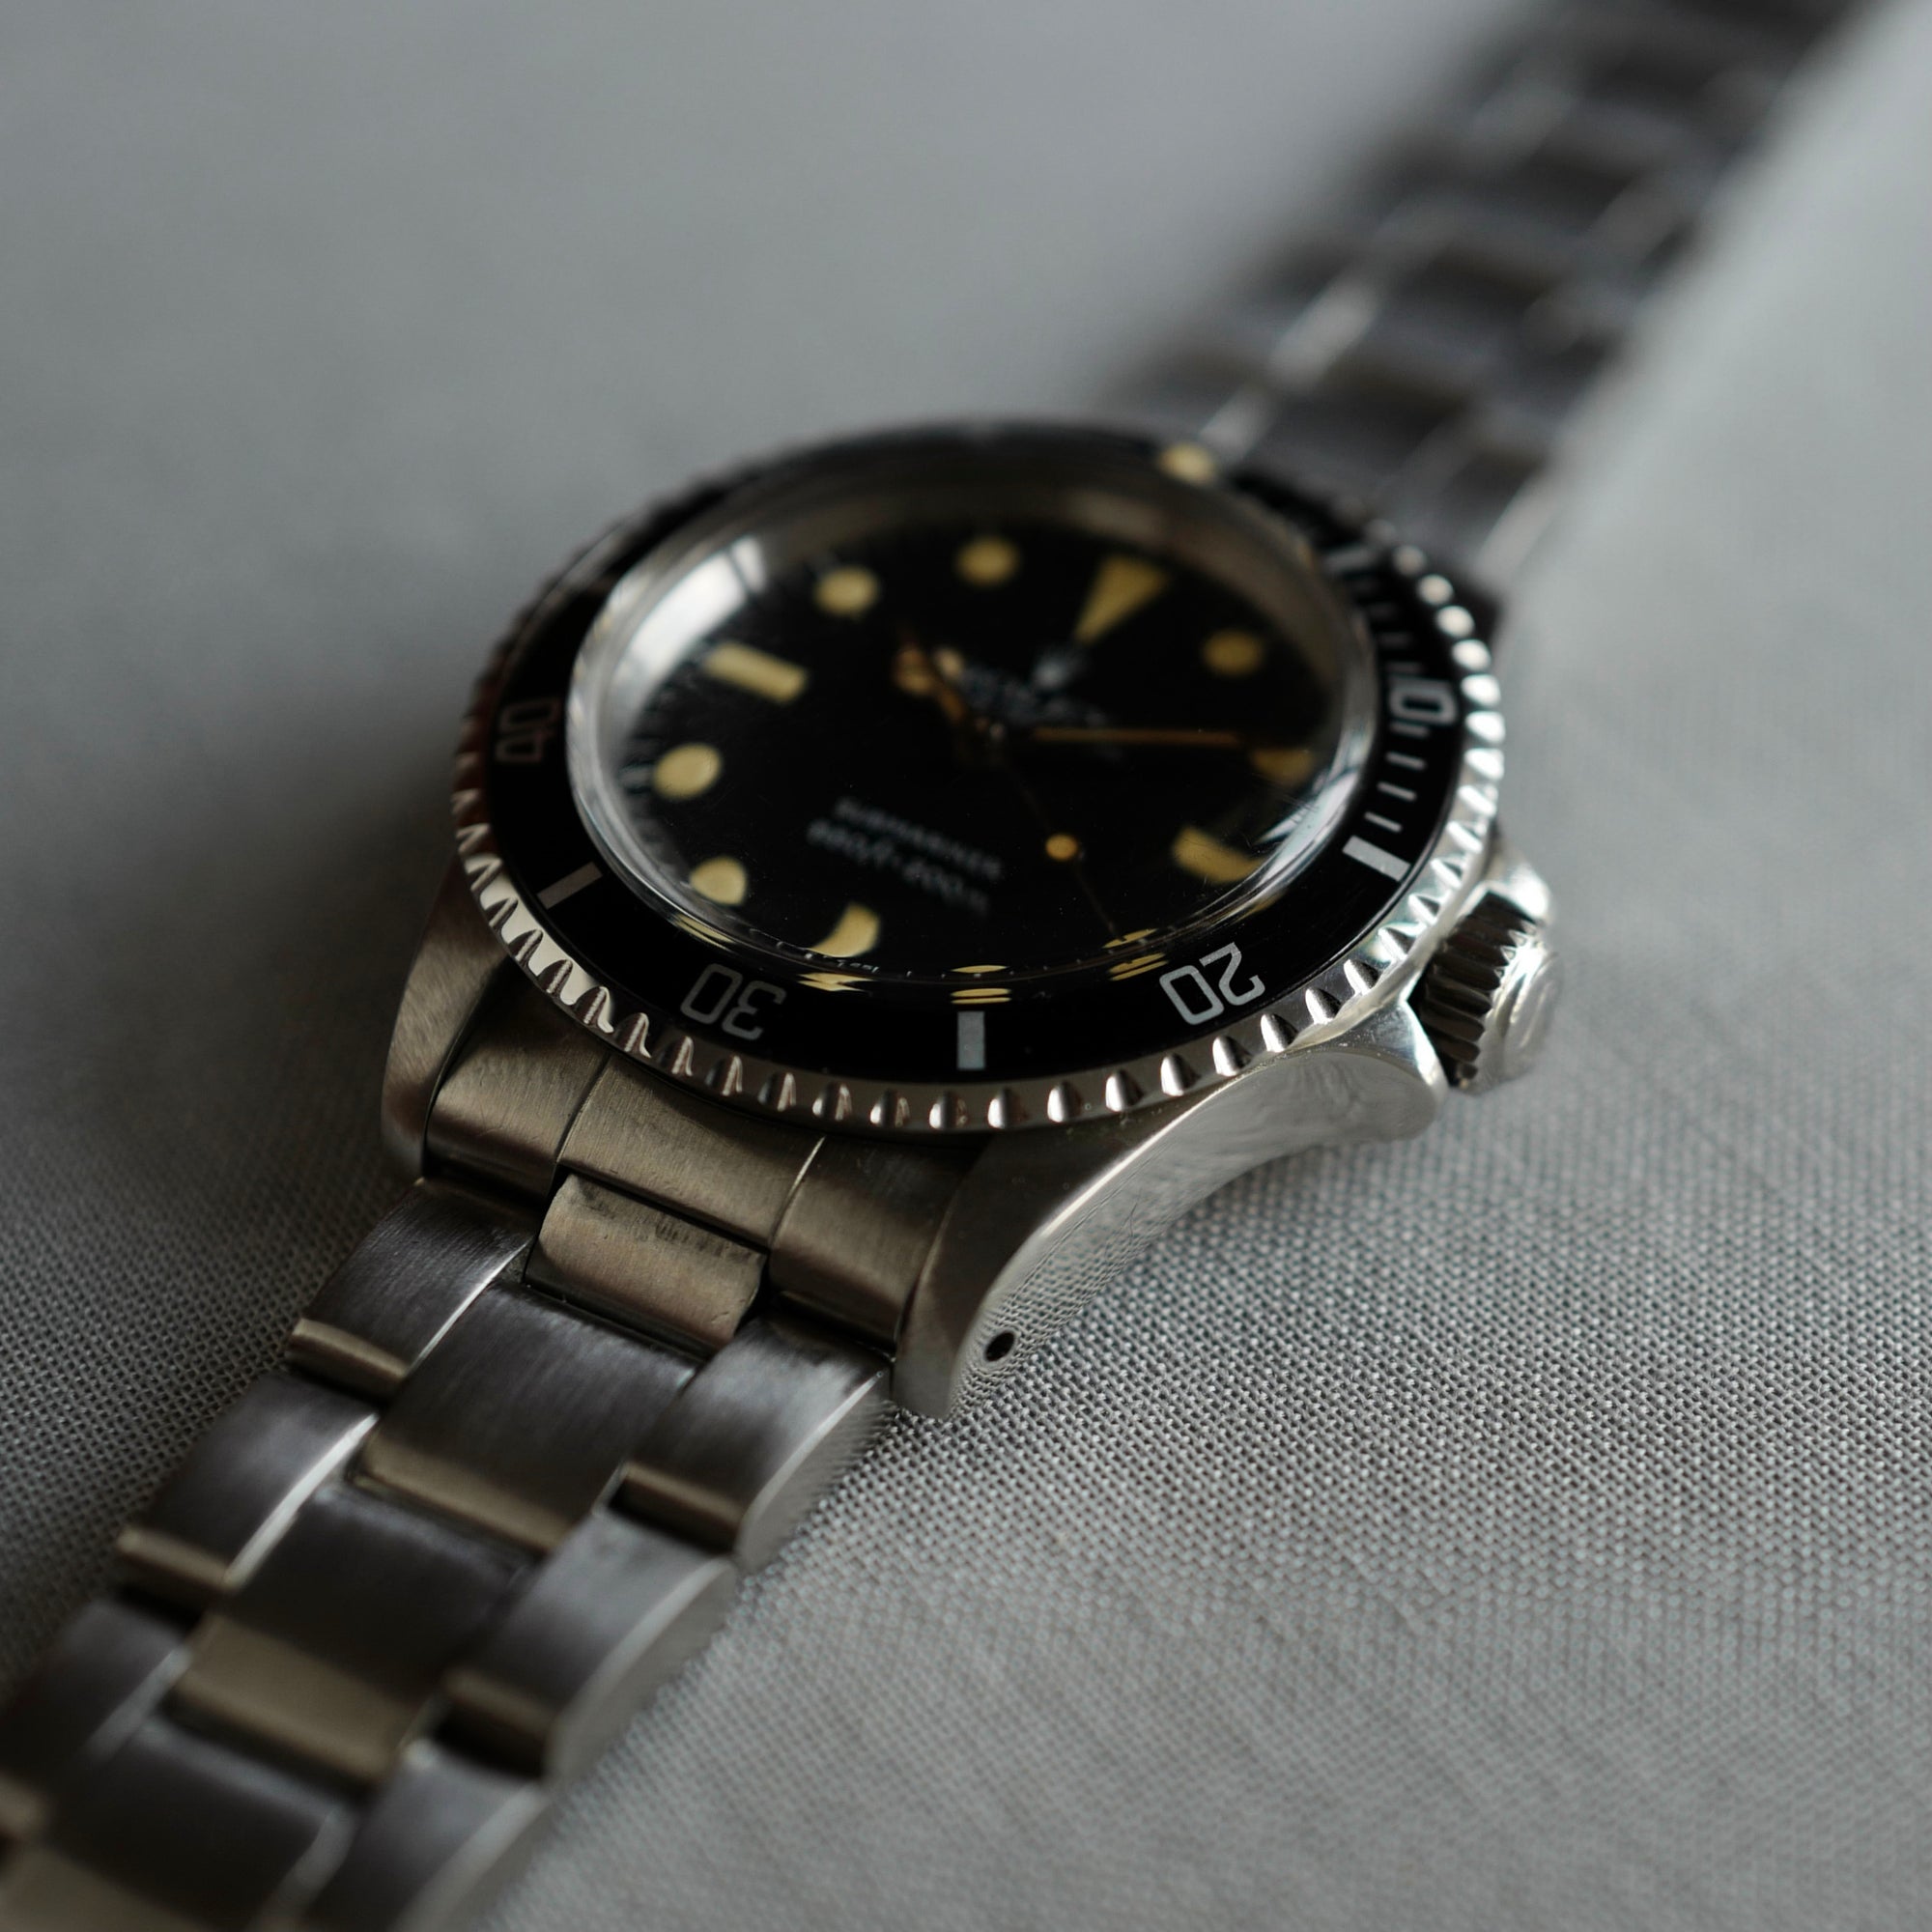 Rolex - Rolex Steel Maxi Dial Submariner Ref. 5513 with Original Warranty - The Keystone Watches